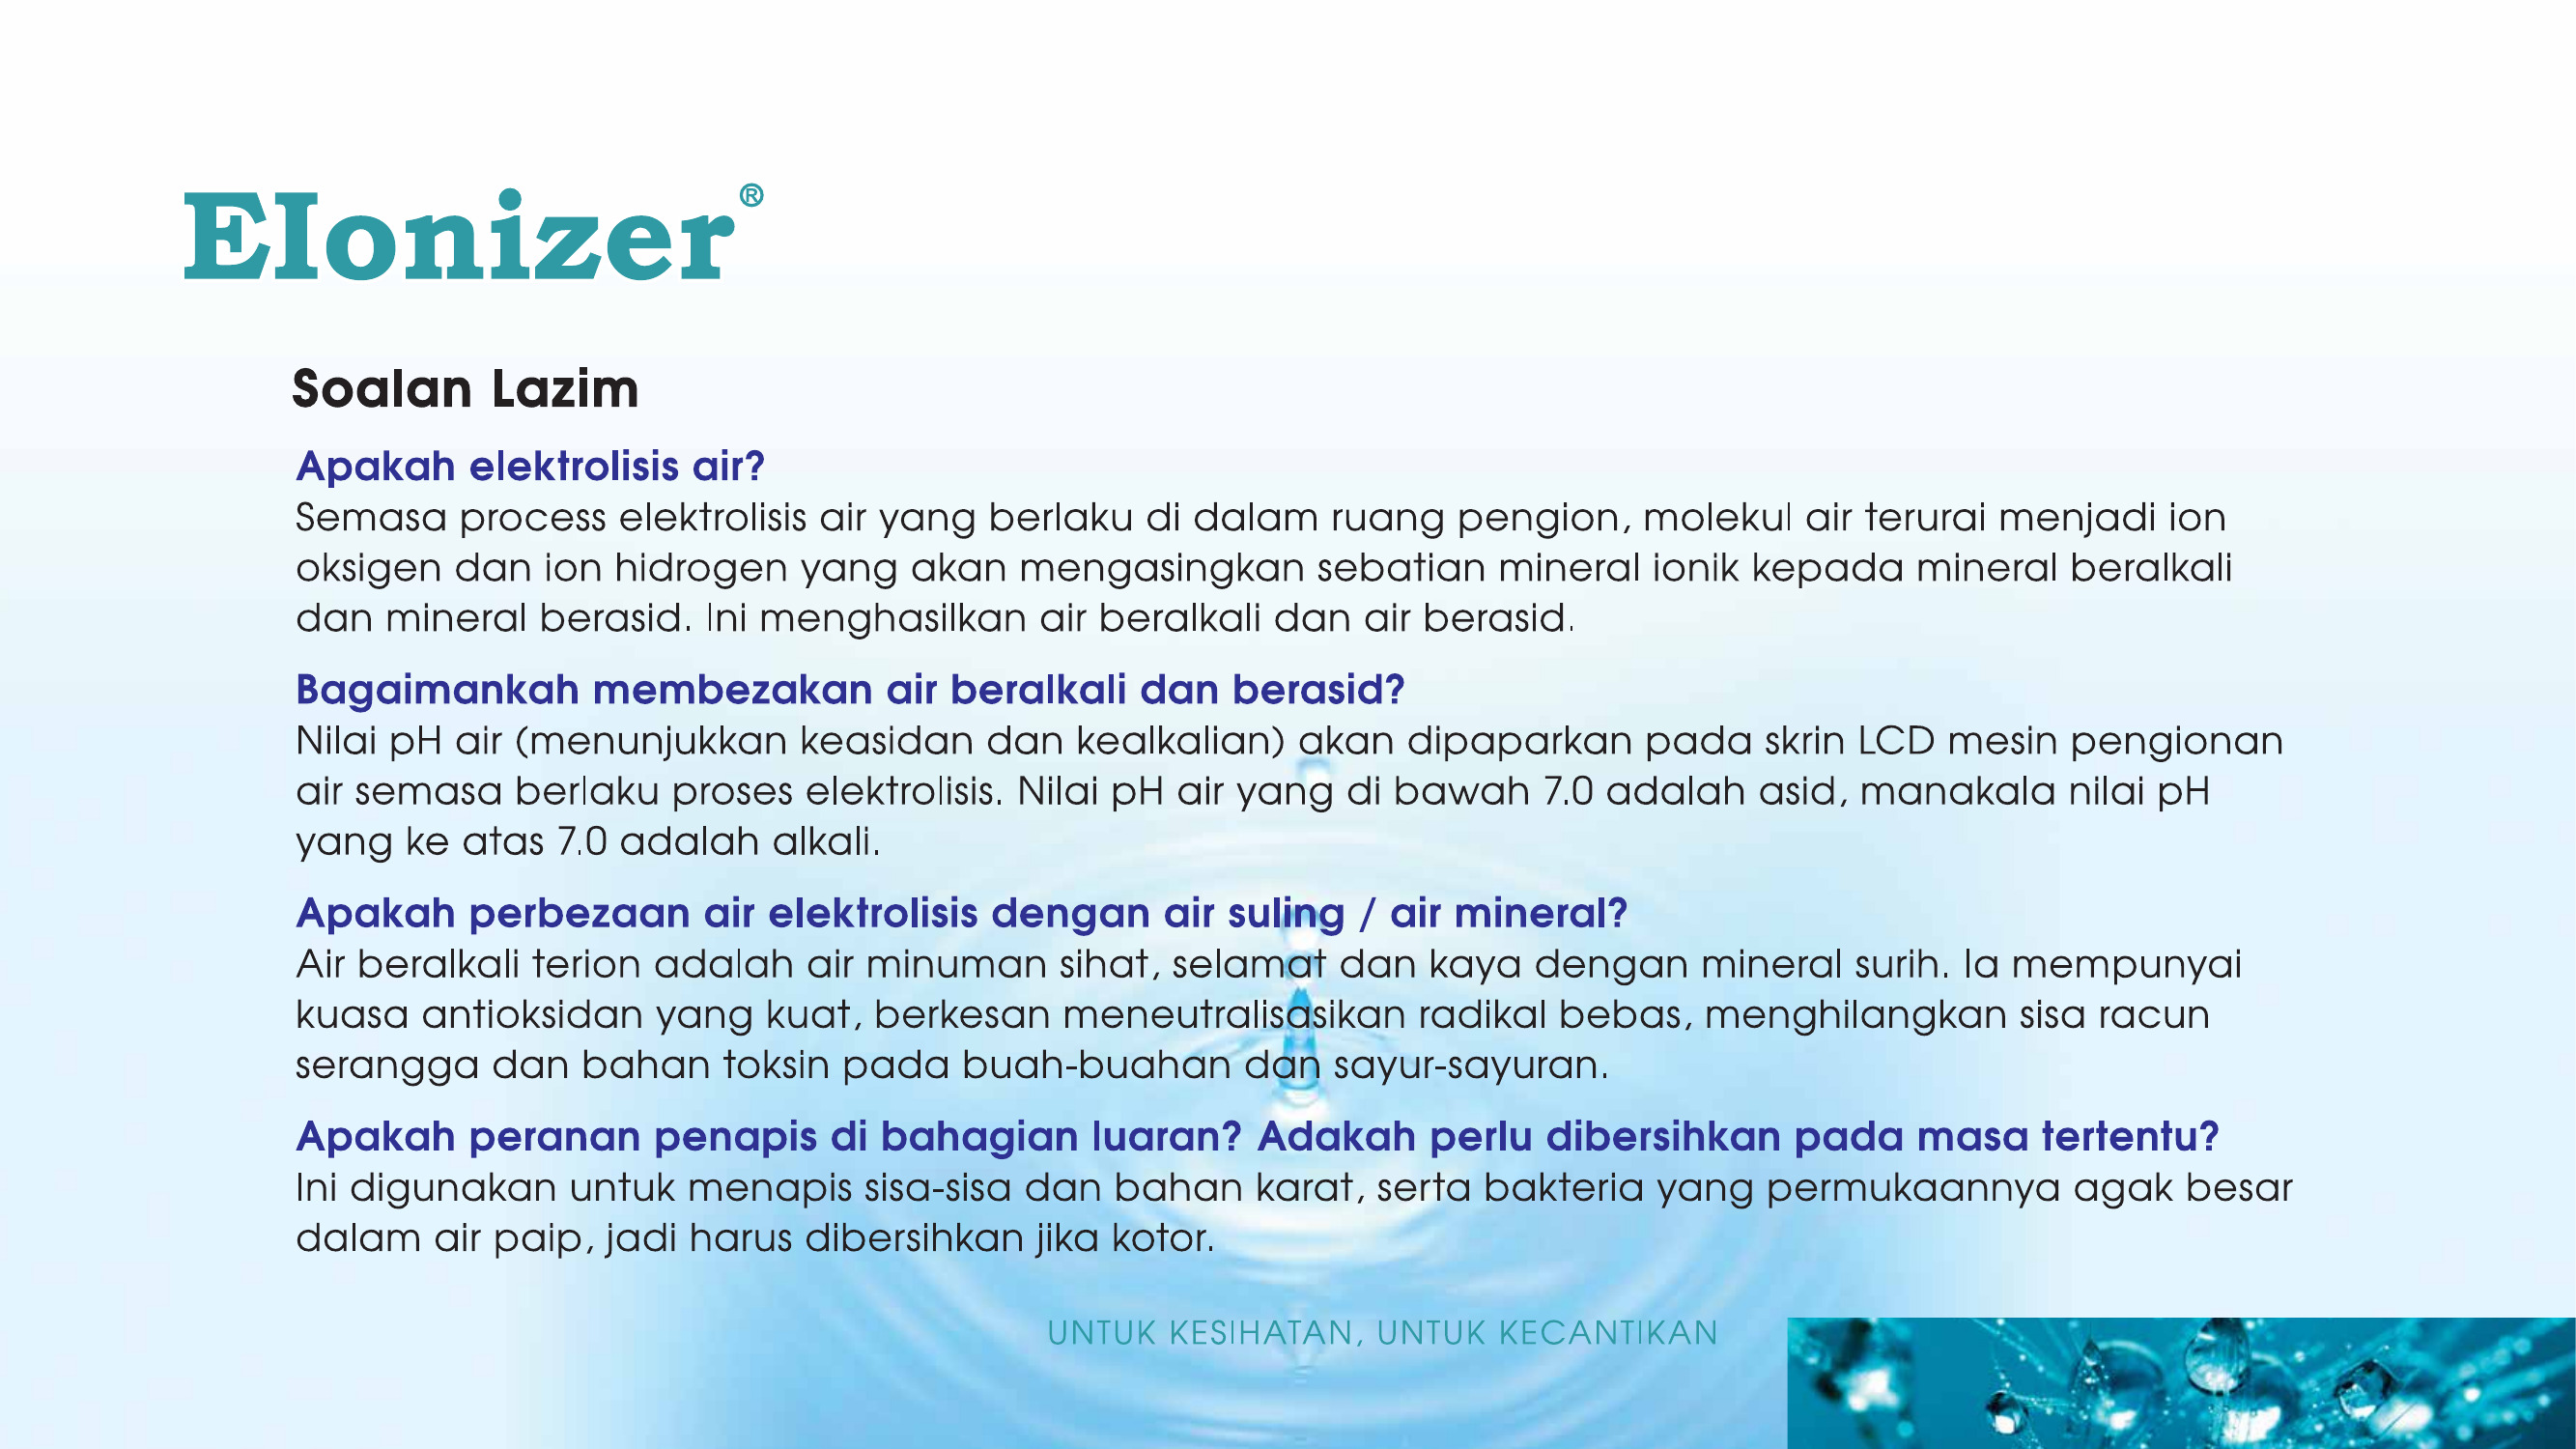 eionizer product details